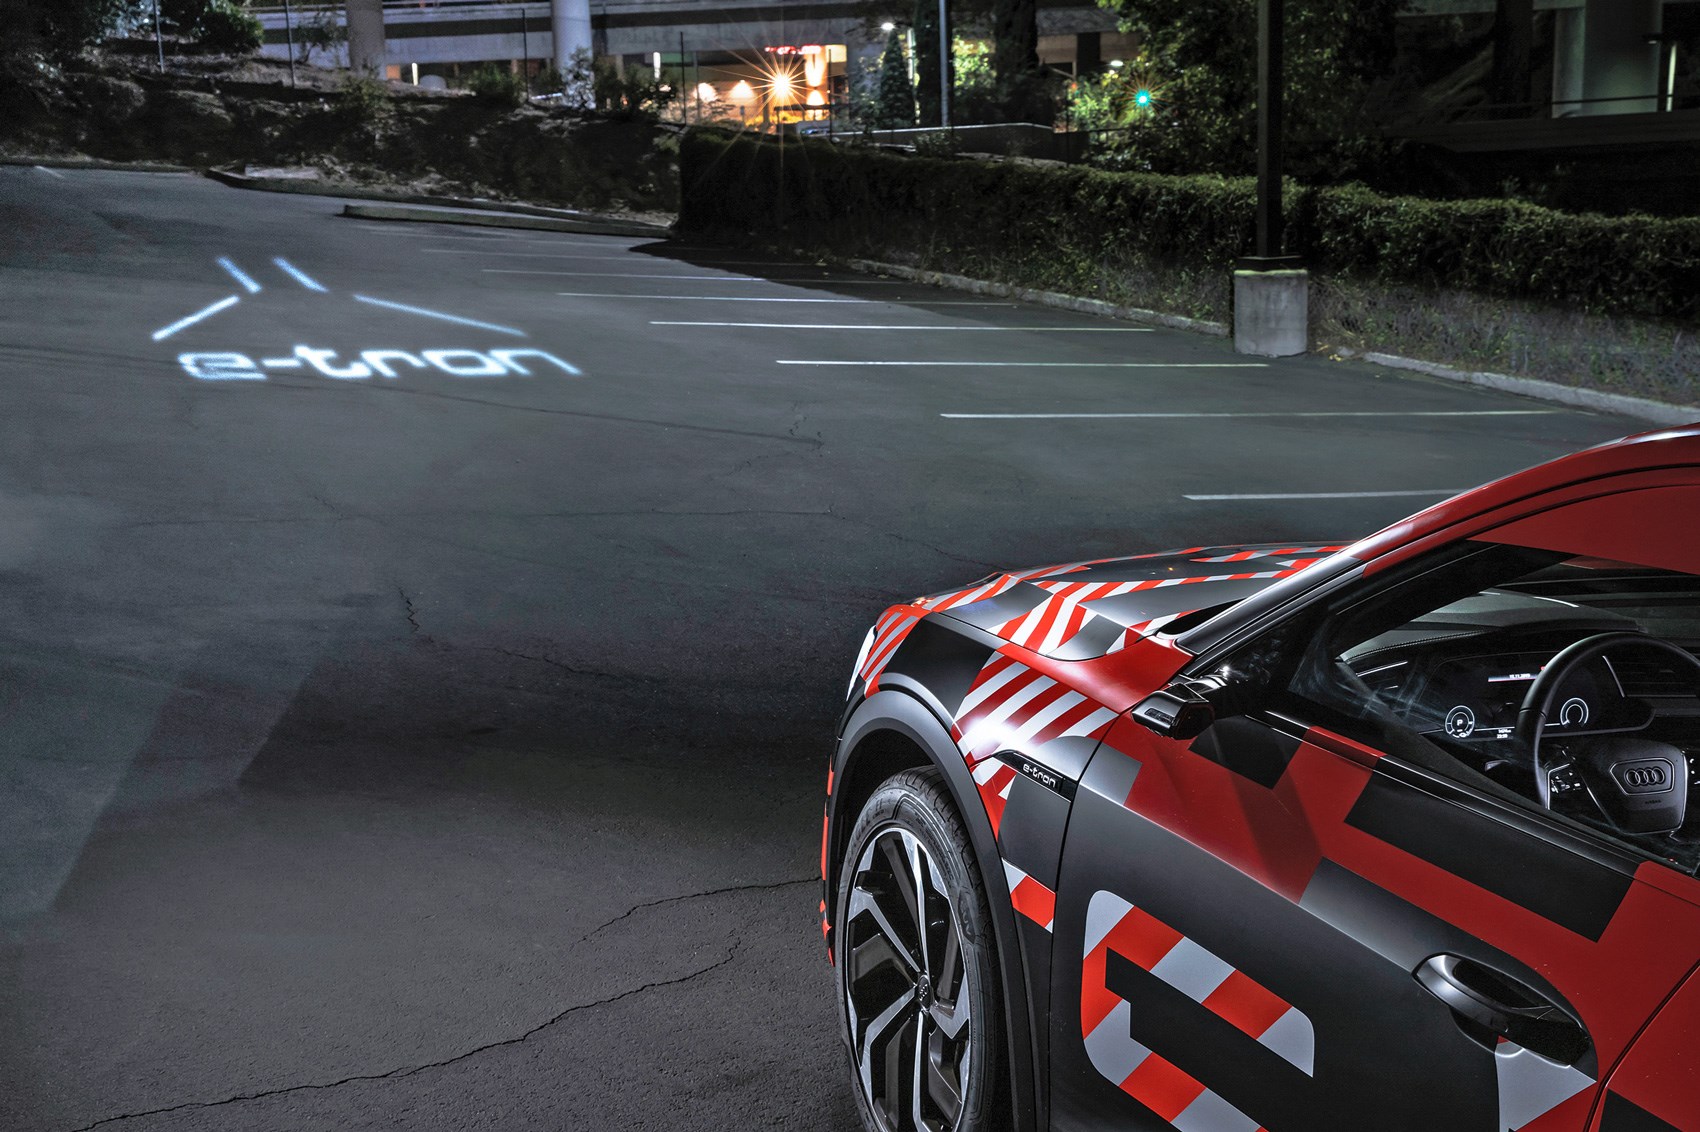 Audi's Digital LED lights: they work? CAR